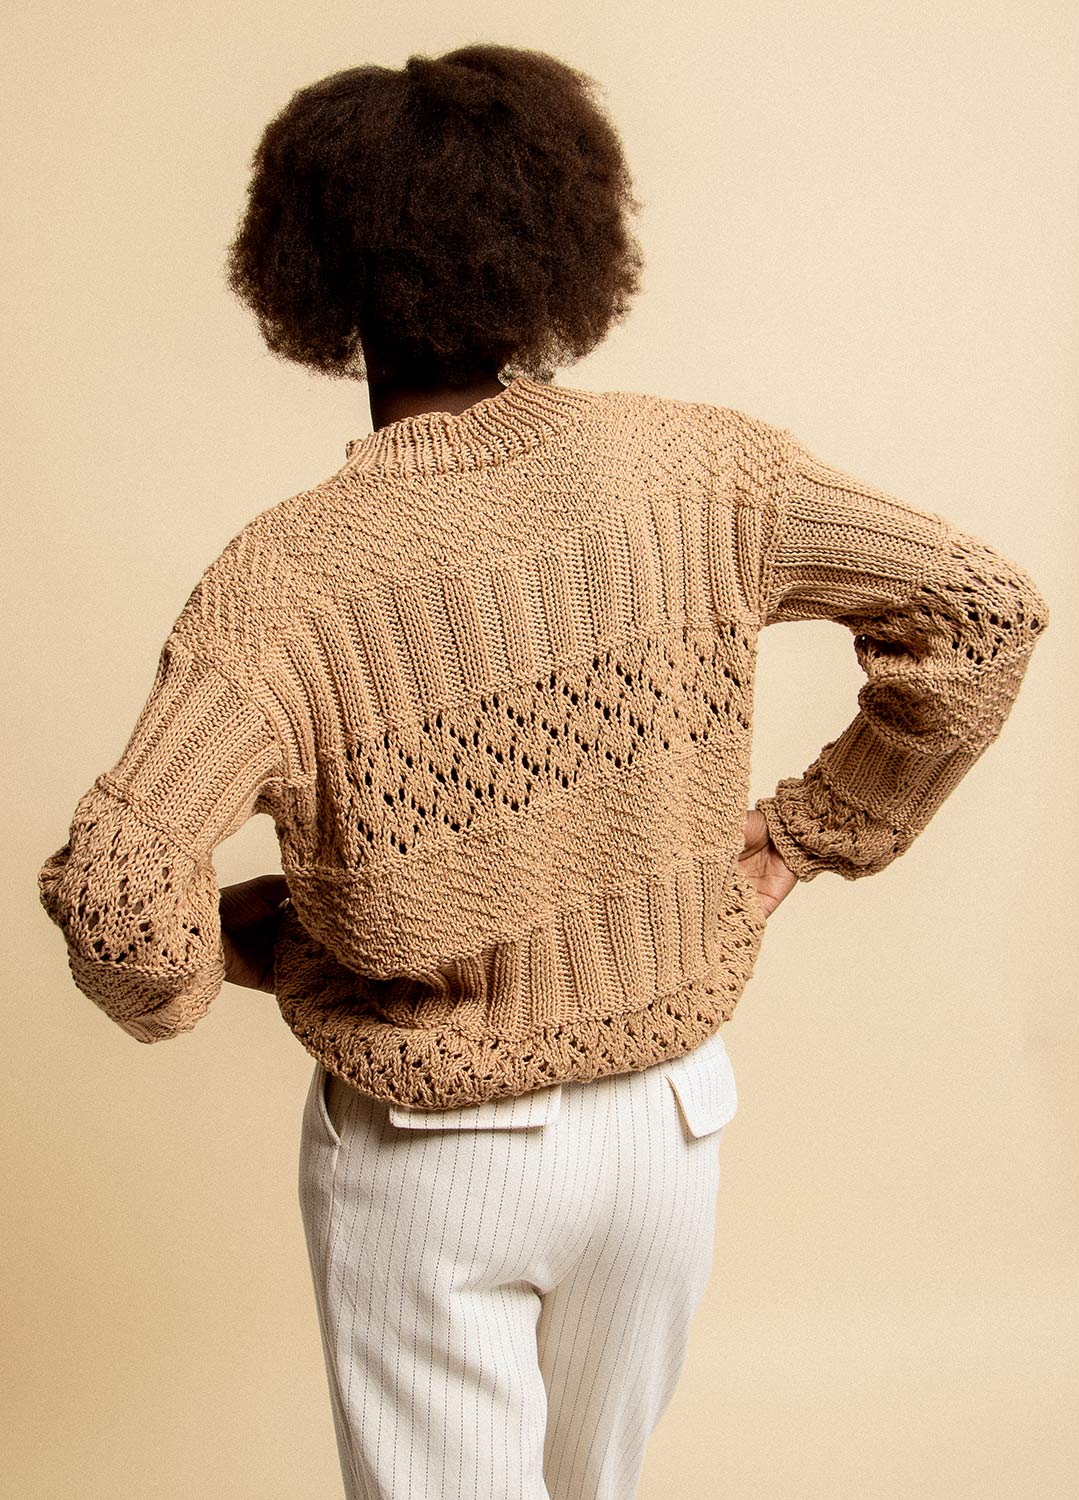 Kerbel Sweater Kit